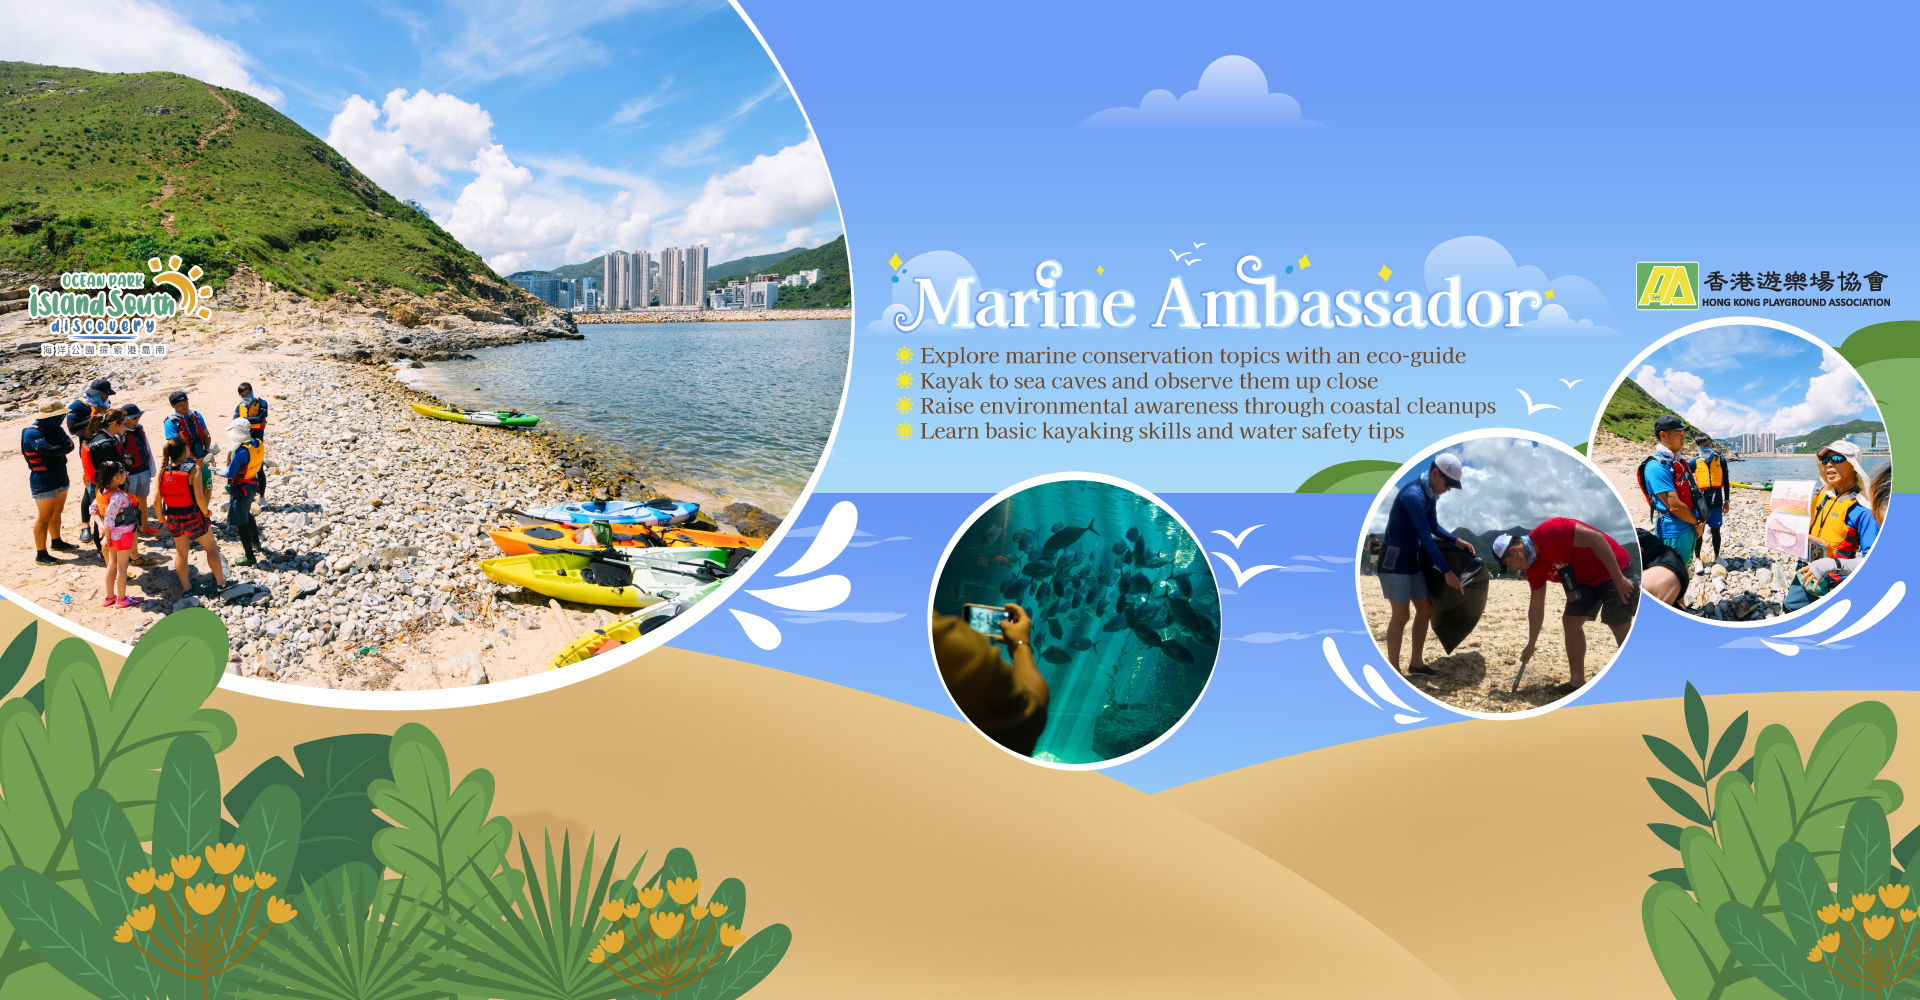 https://media.oceanpark.com.hk/files/s3fs-public/op-marine-ambassador-innerpage-banner-desktop-en.jpg